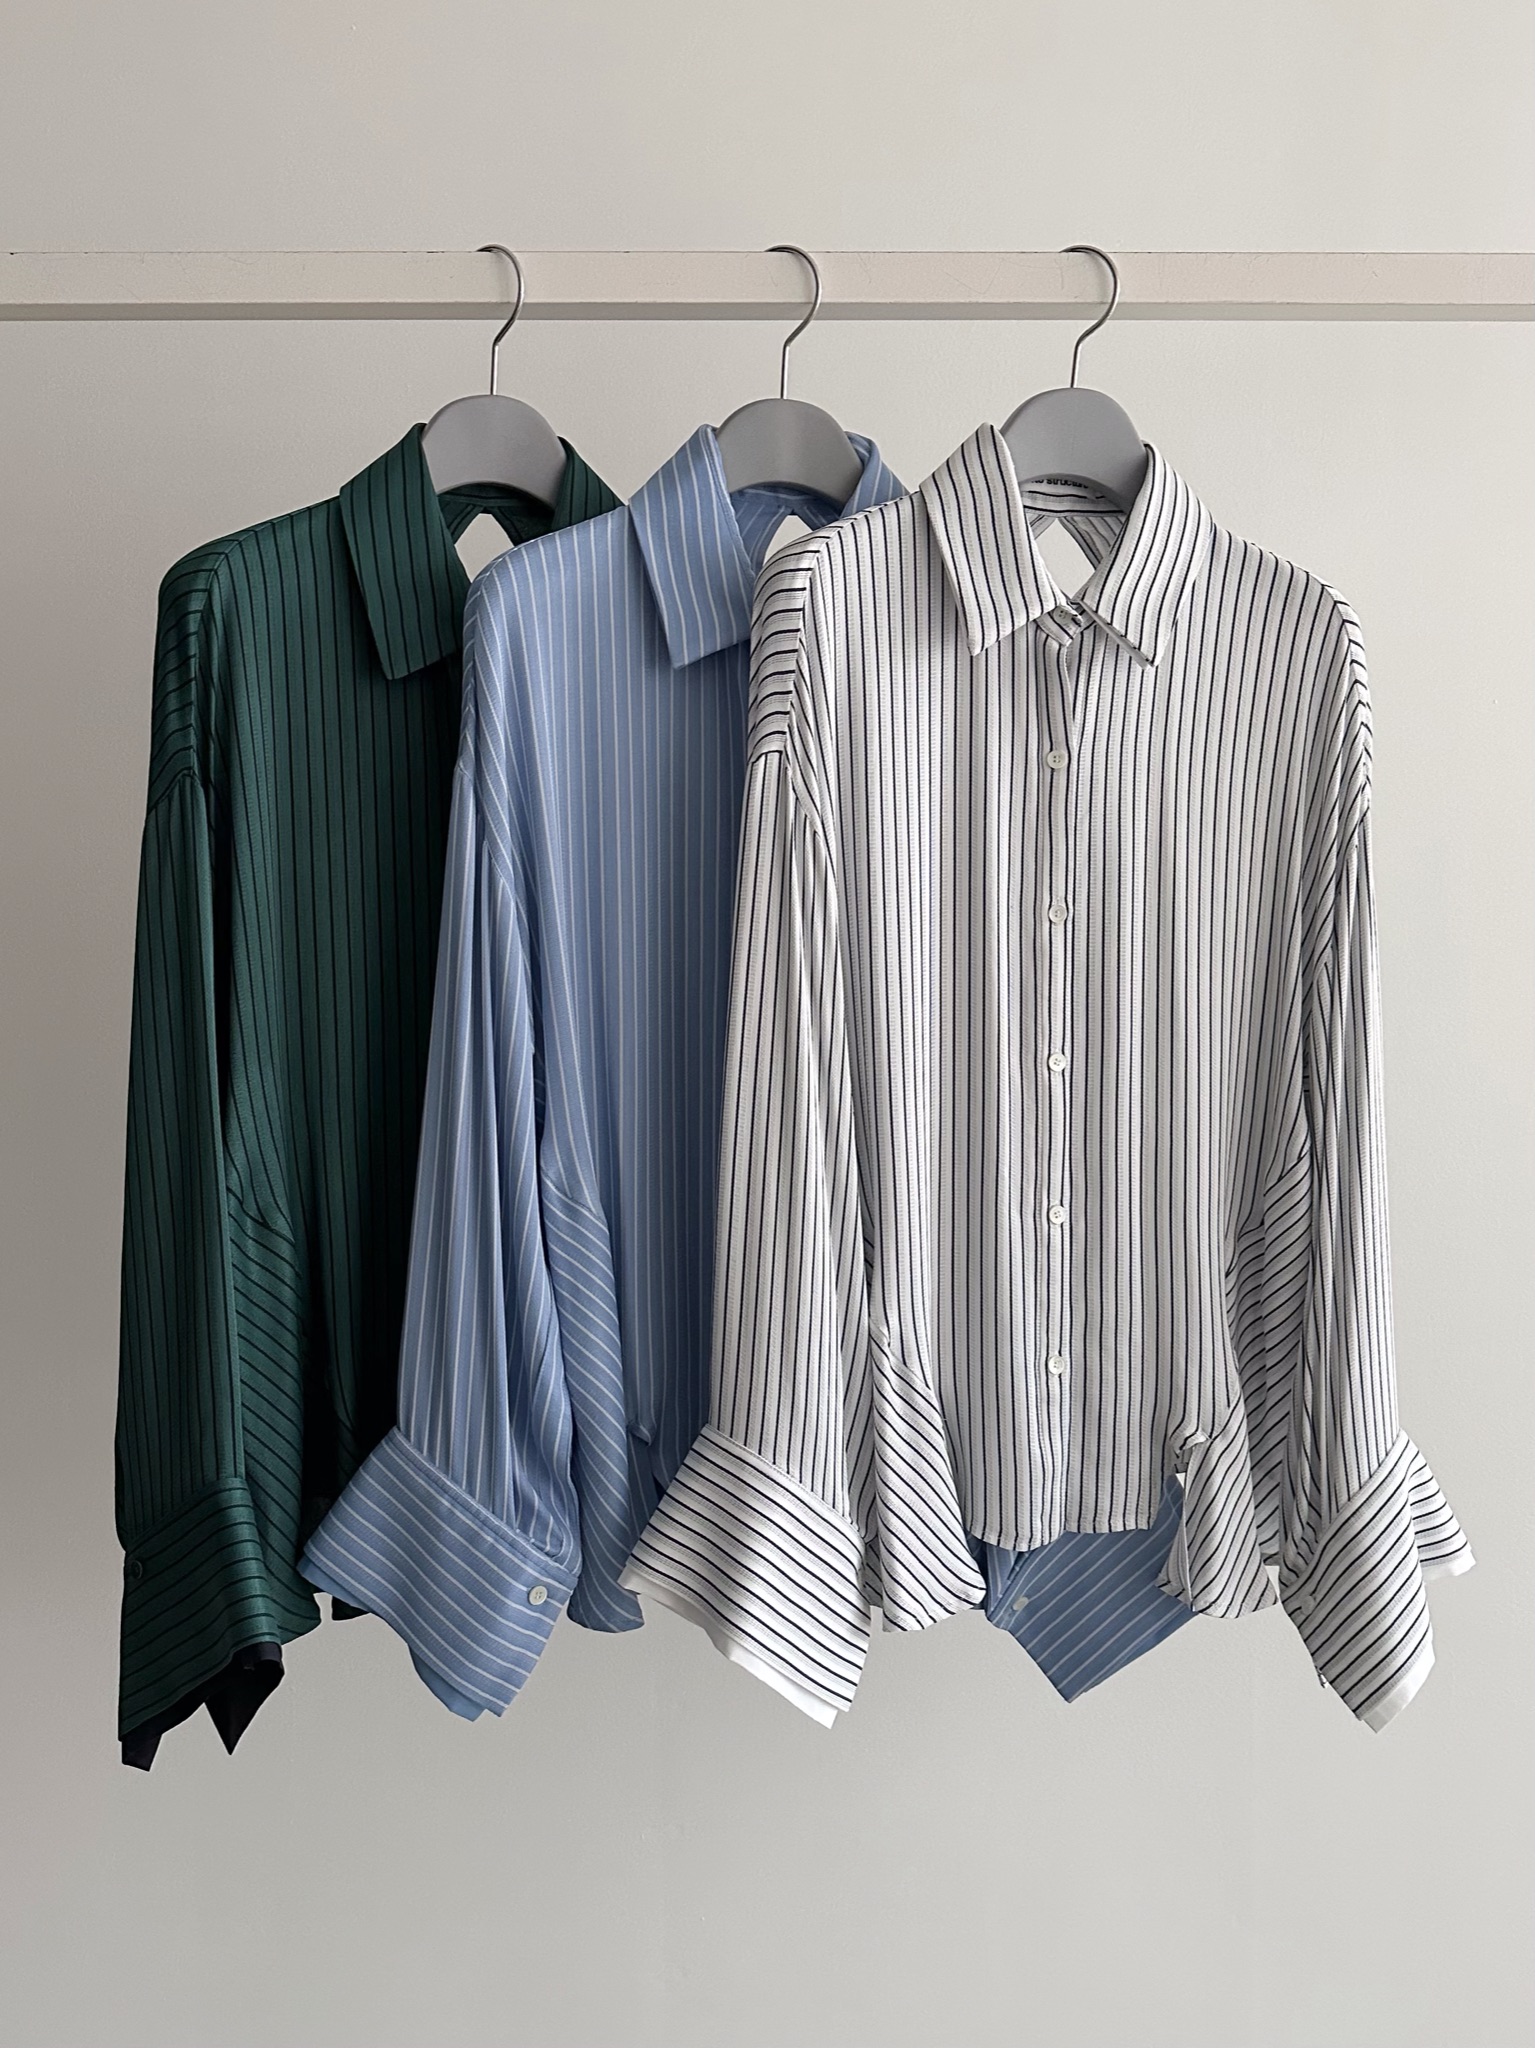 Viscose Striped Shirt | 岐阜県柳ヶ瀬地区にてセレクトショップ phenom